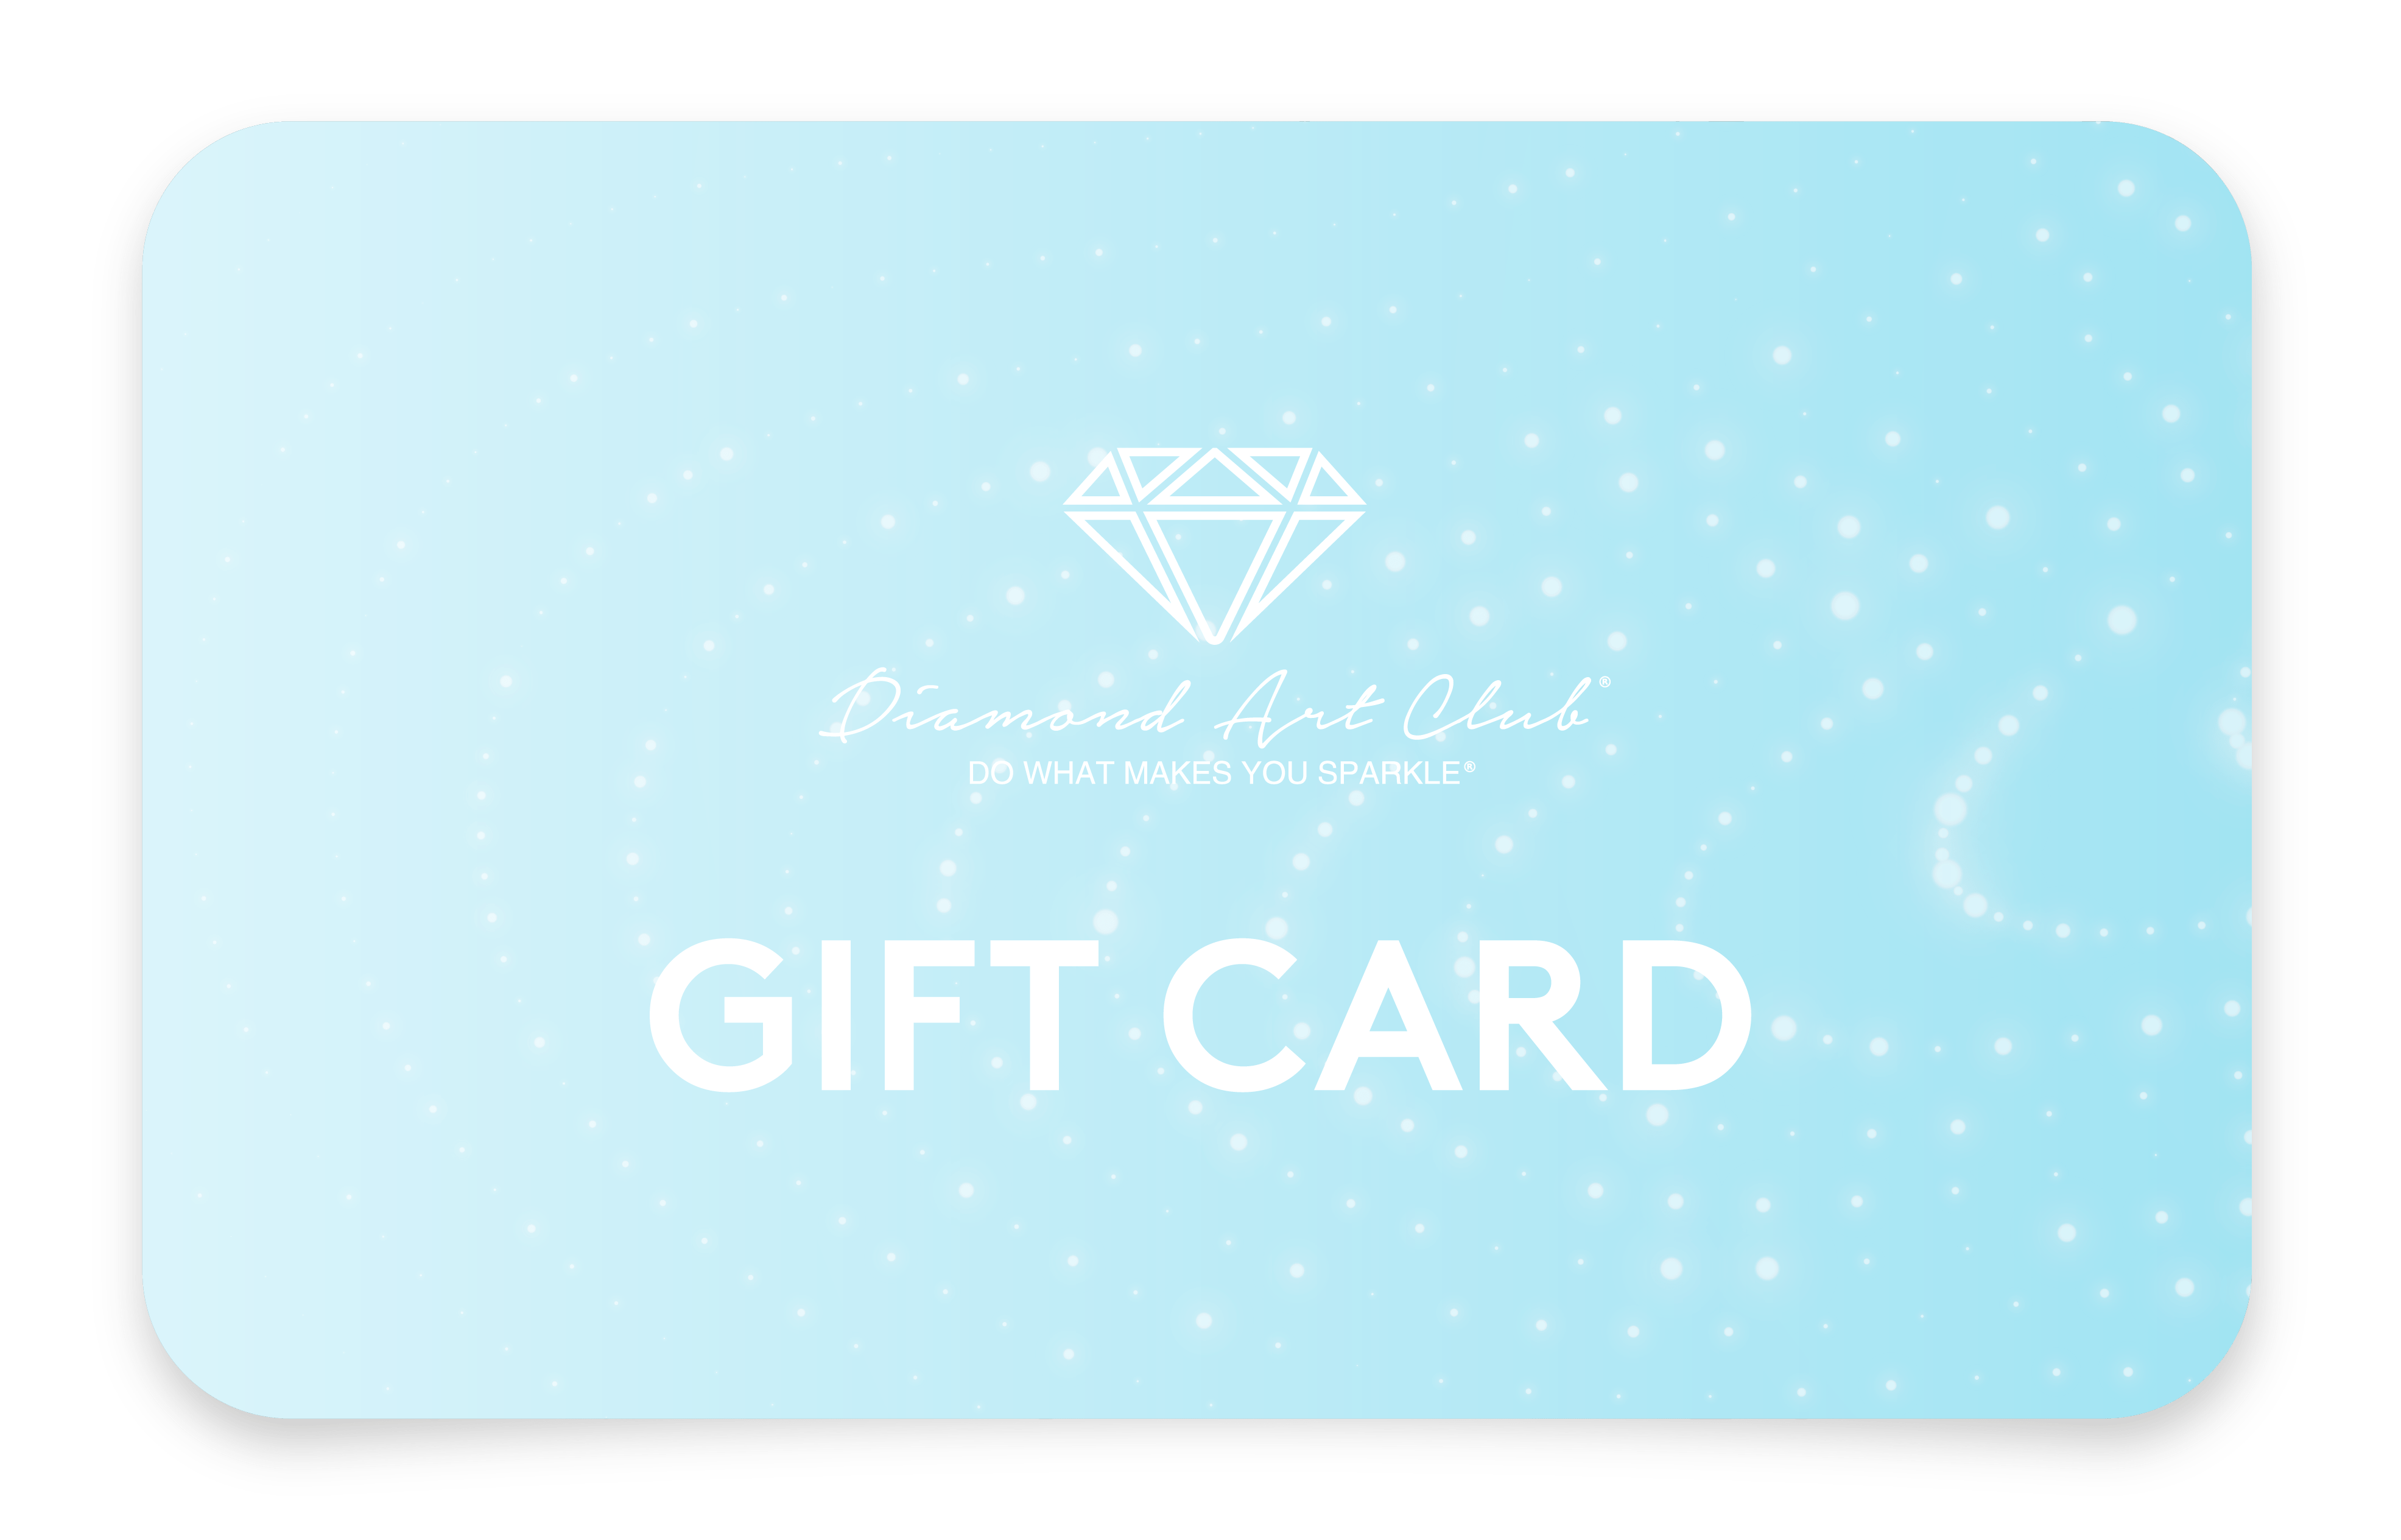 Diamond Painting Birthday Cards for Kids Adults Gift Card Diamond Art Kits